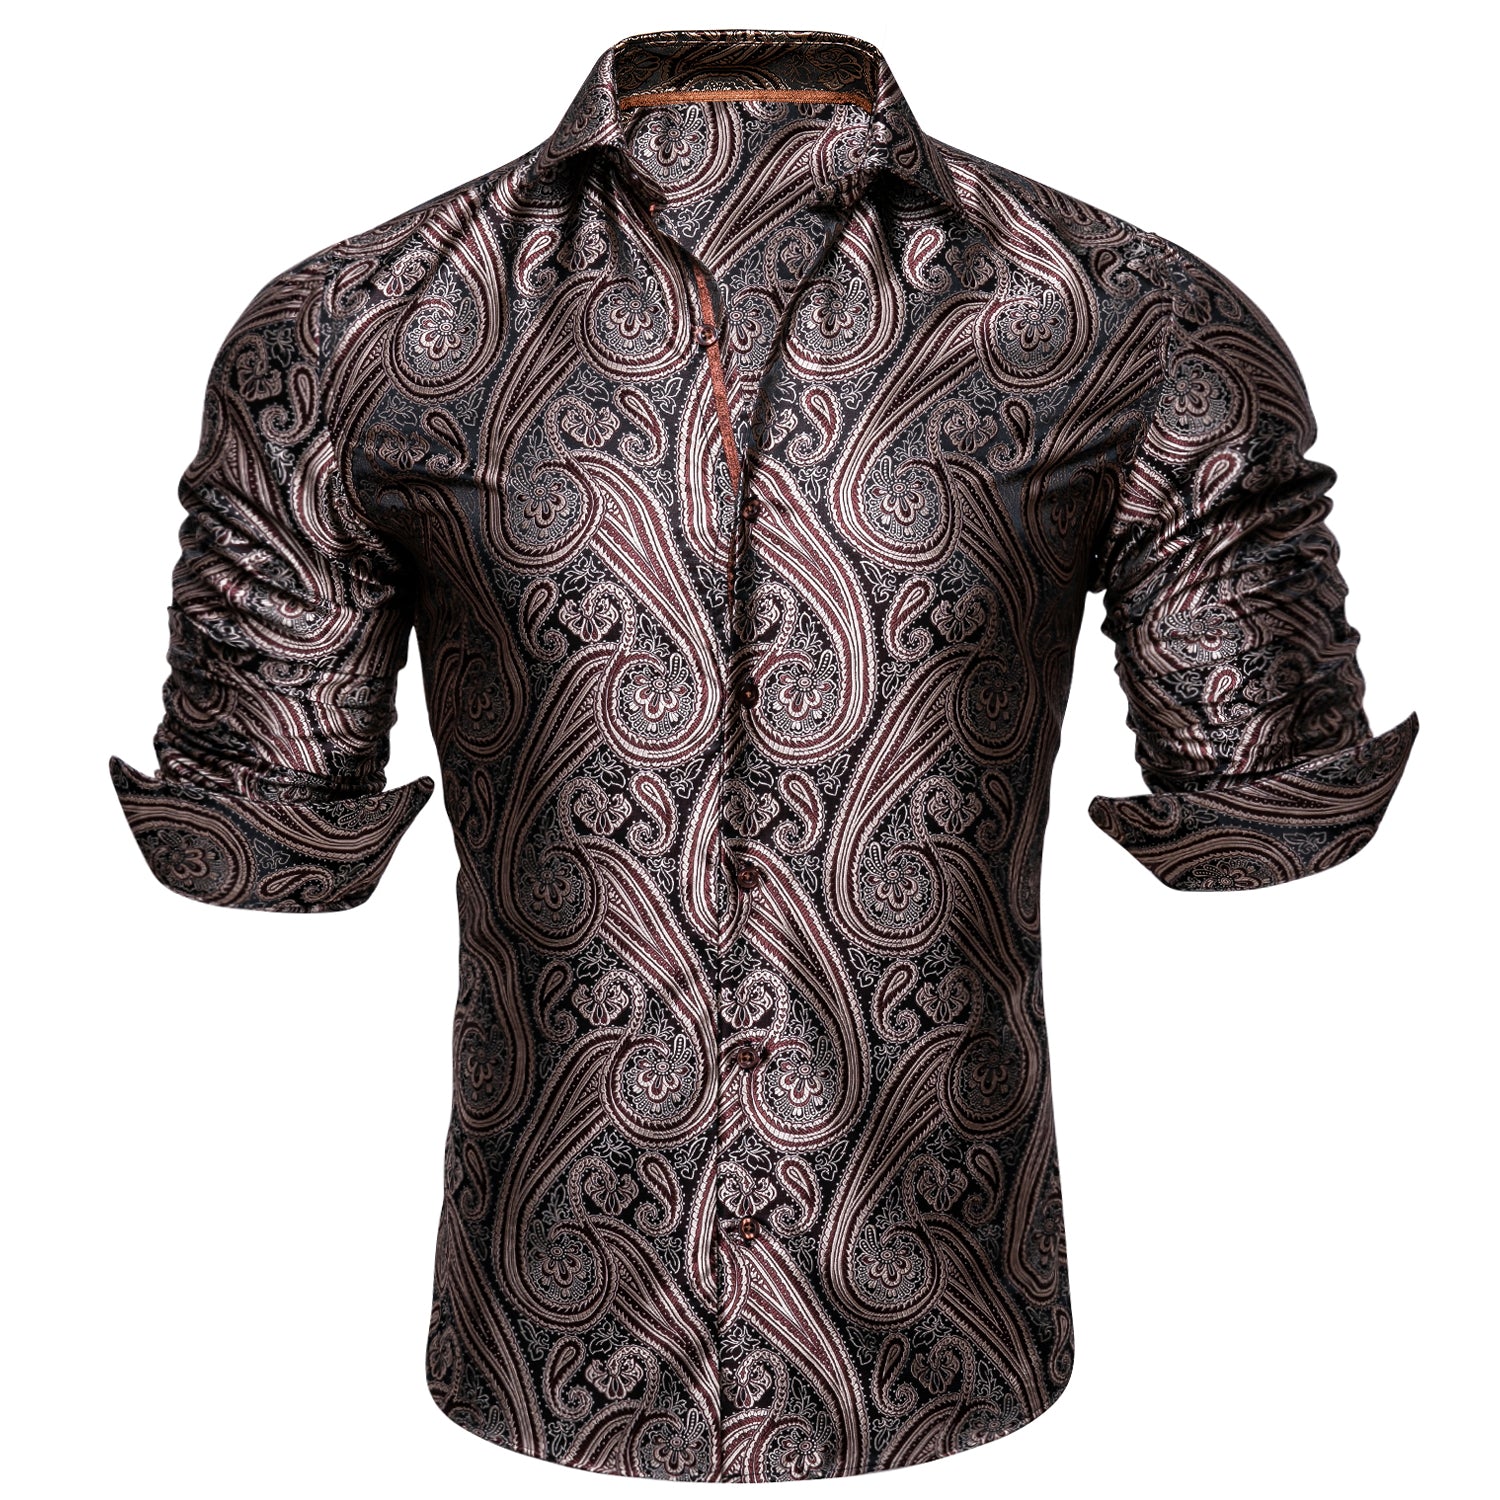 Barry.wang Brown Black Silk Paisley Tribal Long Sleeve Daily Tops Men's Shirt